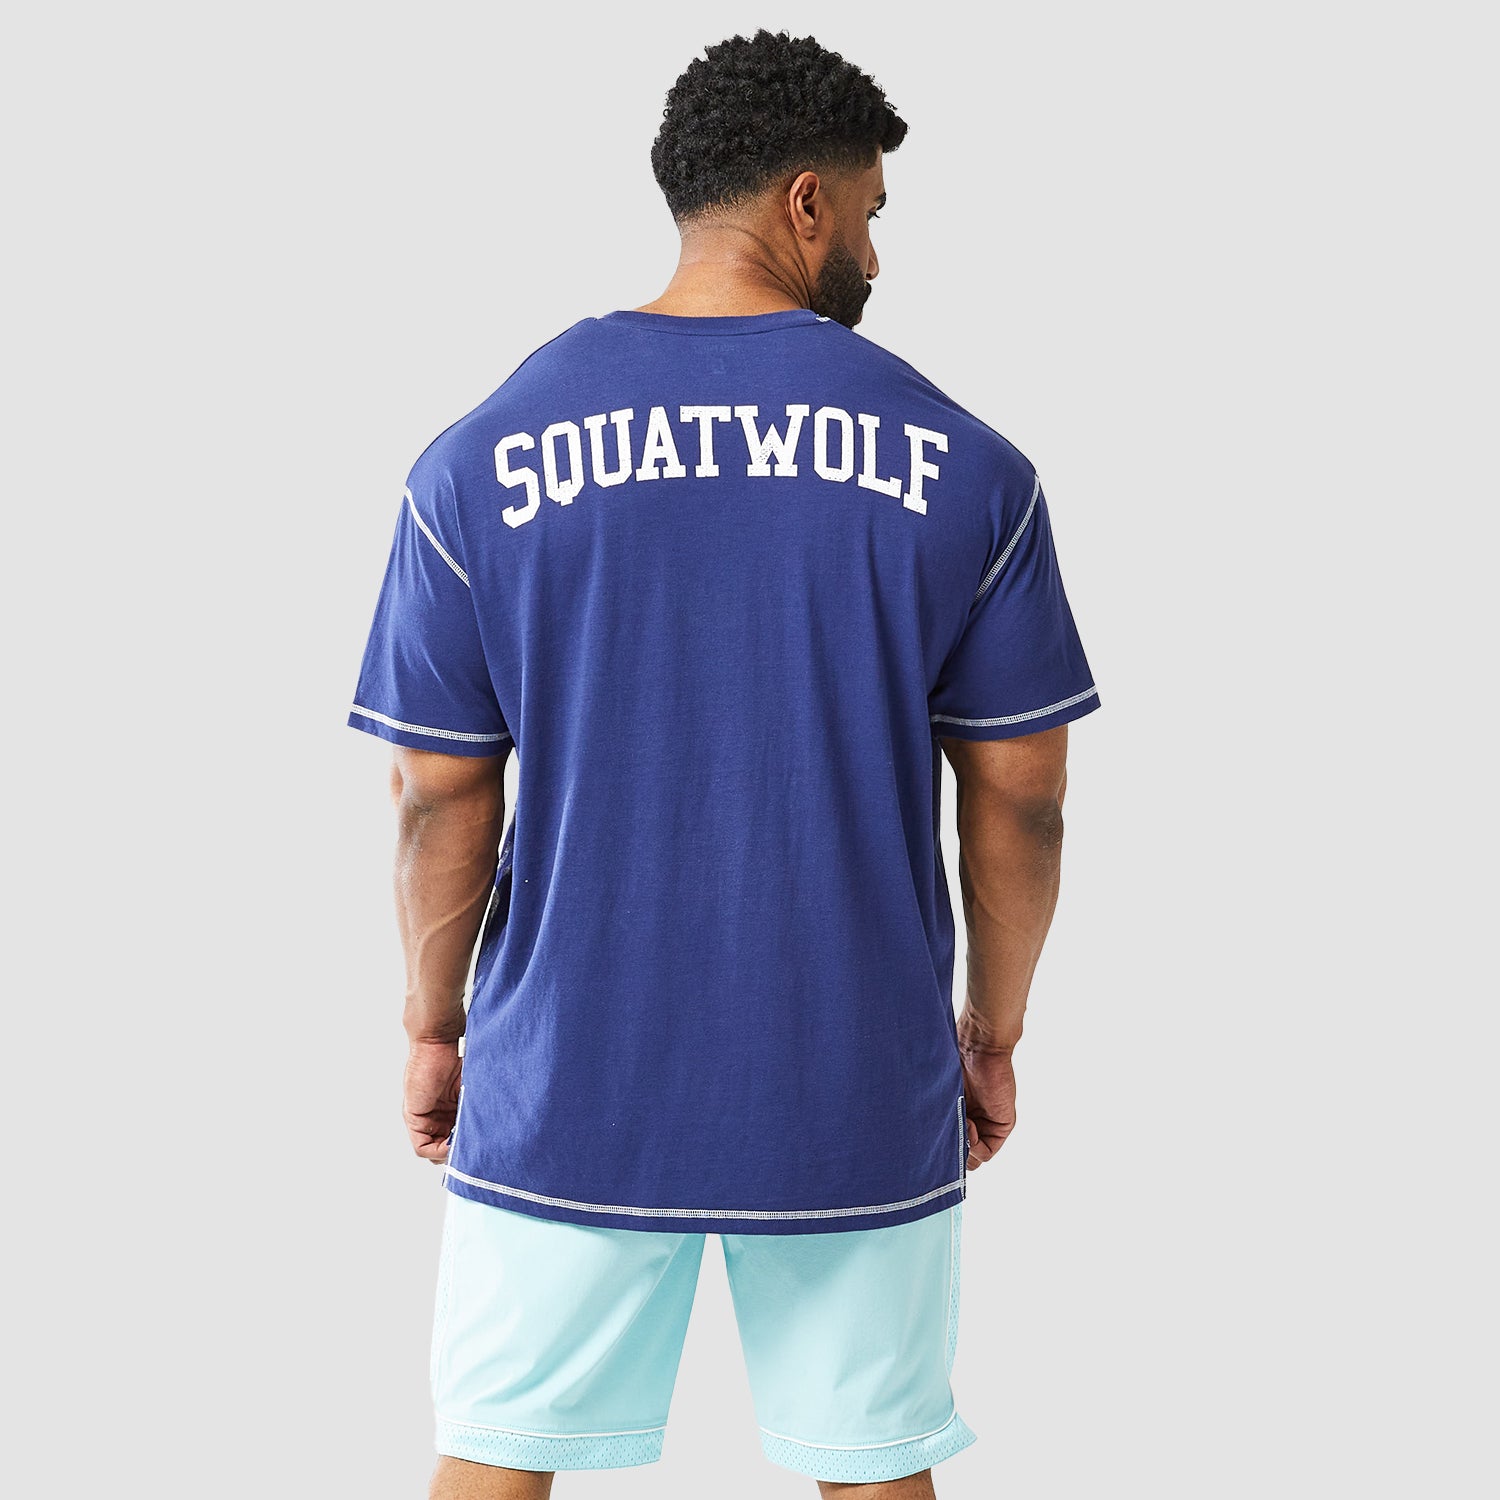 squatwolf-gym-wear-golden-era-core-oversized-tee-blue-workout-shirts-for-men